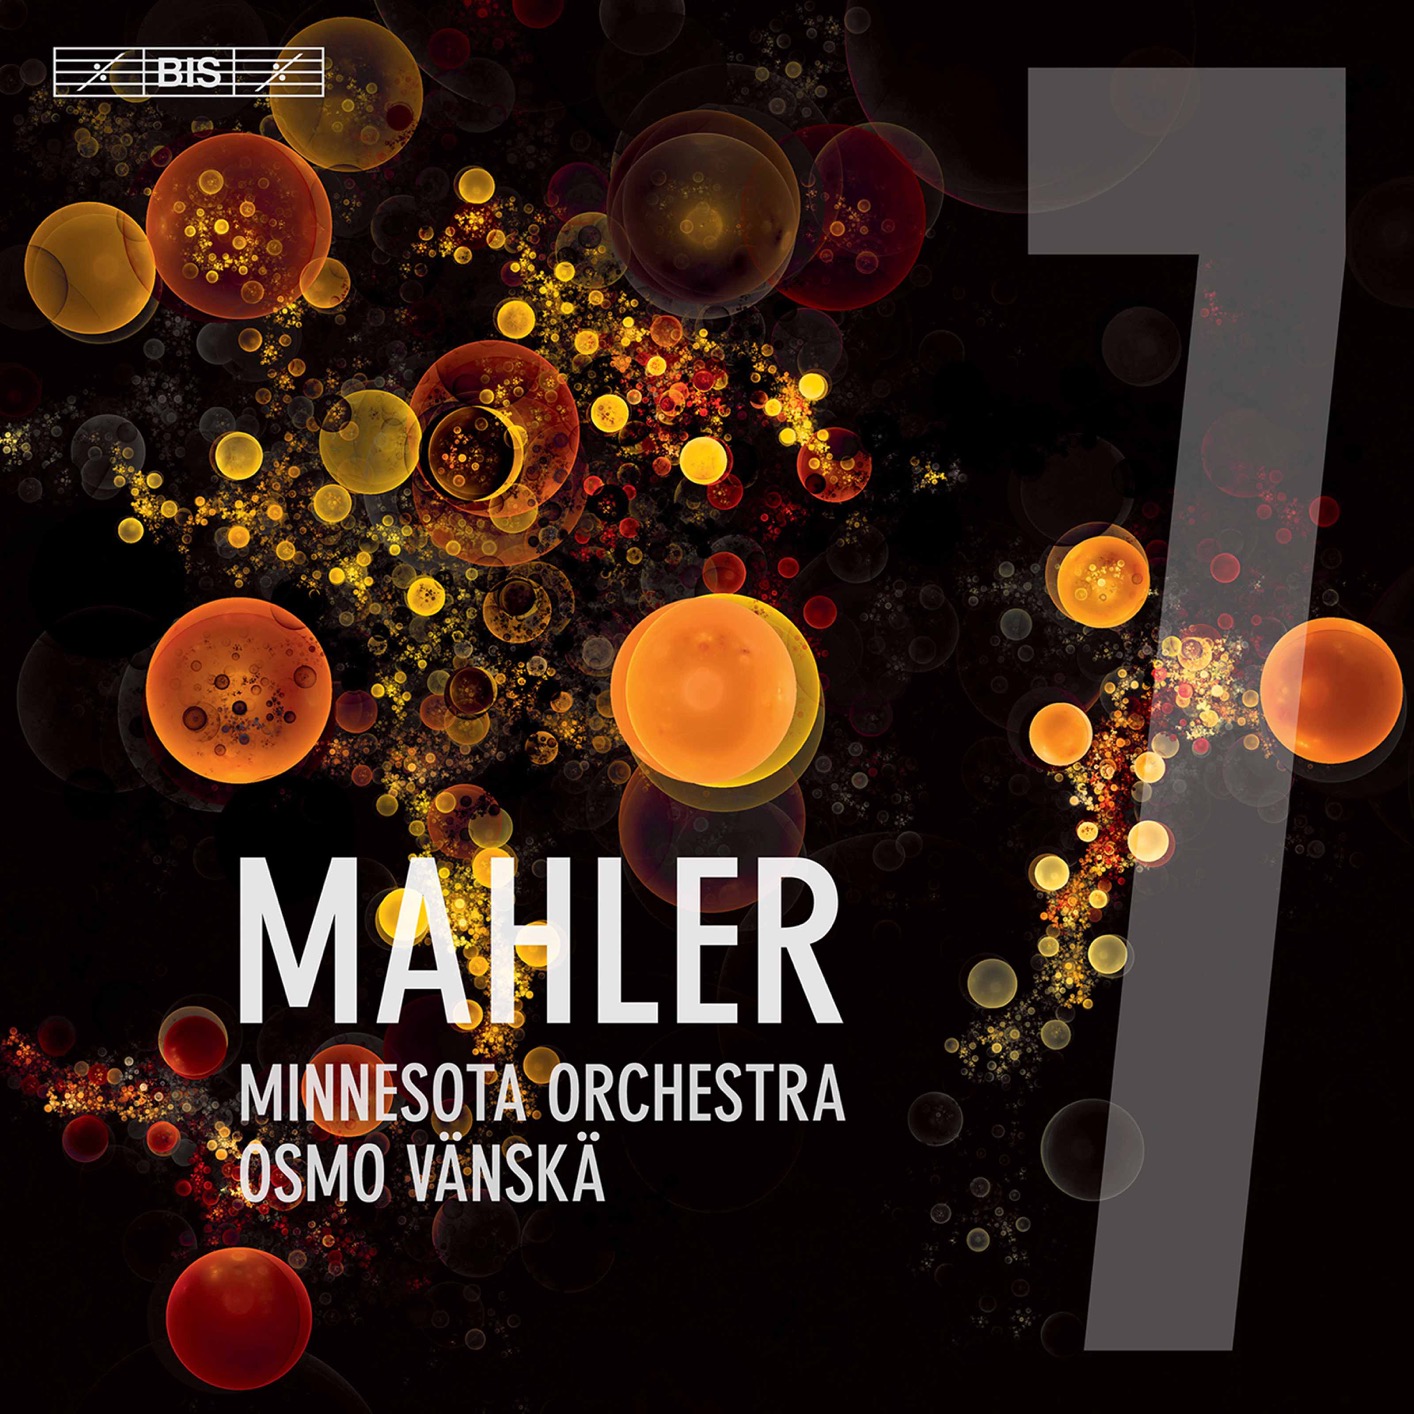 Minnesota Orchestra, Osmo Vanska - Mahler - Symphony No. 7 in E Minor ”Song of the Night” (2020) [FLAC 24bit/96kHz]